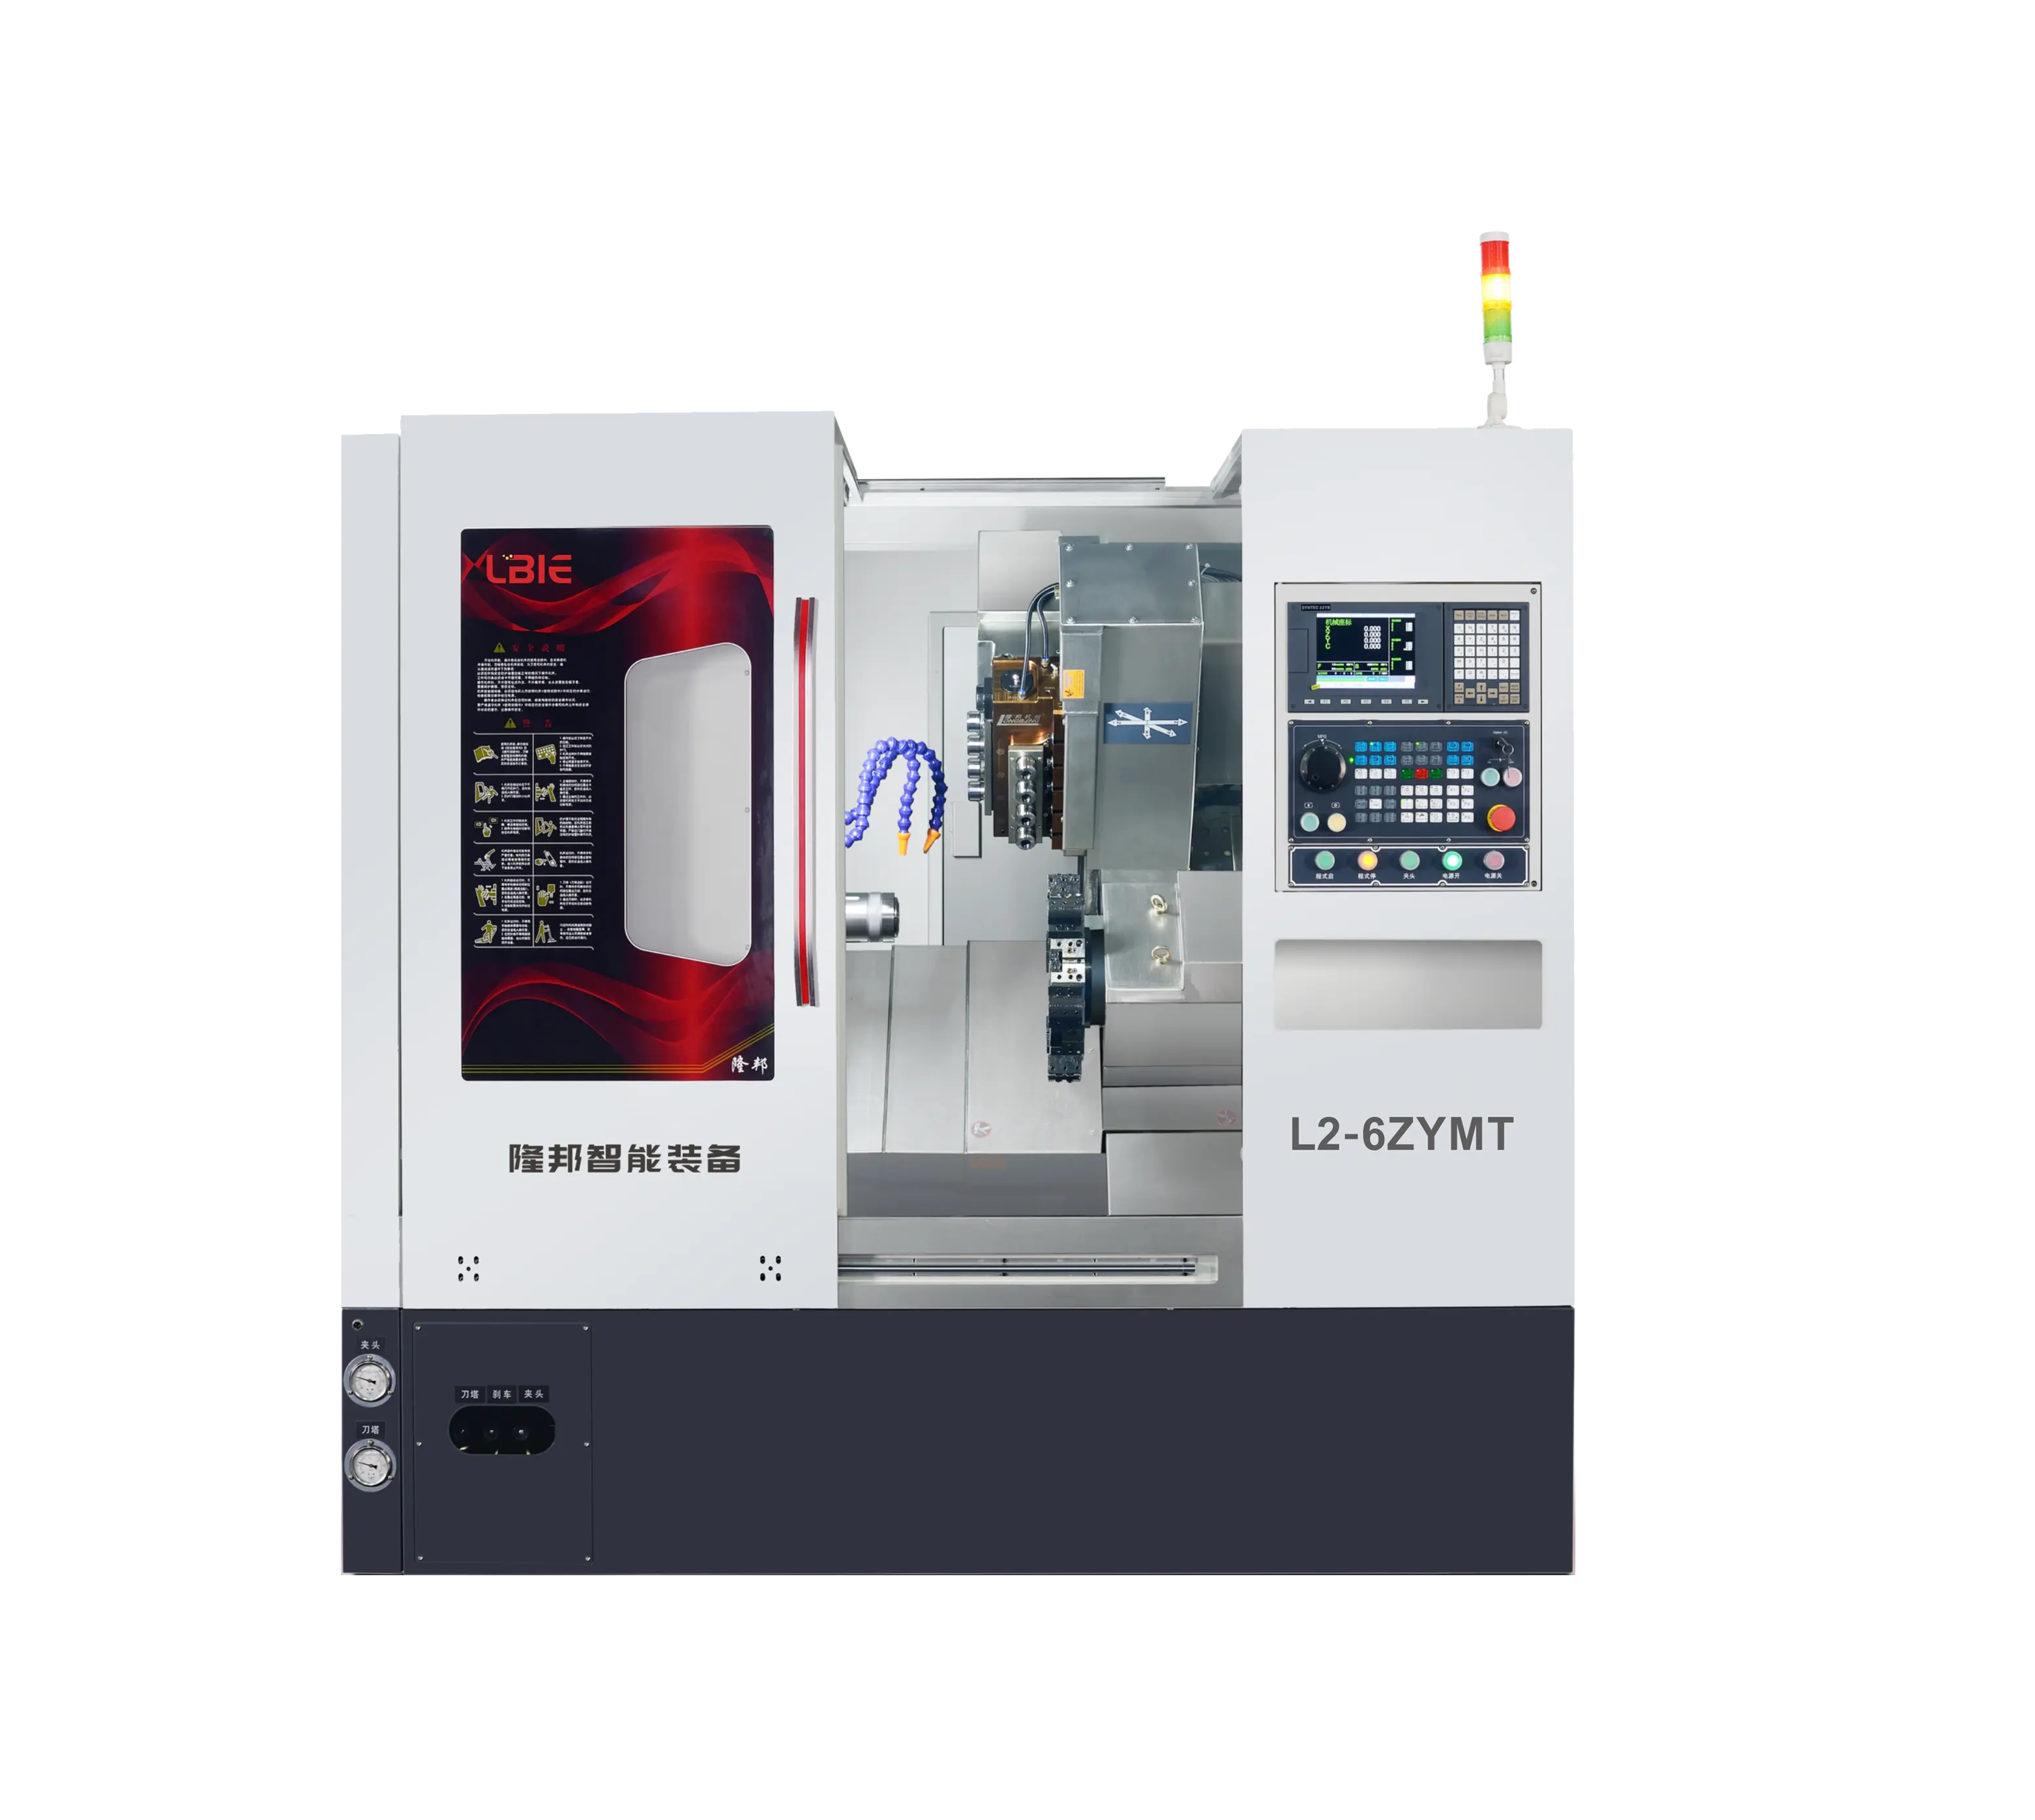 LBIE CNC-Metall drehmaschine Teile dreh-und Fräsmaschine für CNC-Drehmaschinen FANUC oder Syntec Swiss-Turn fräsmaschine